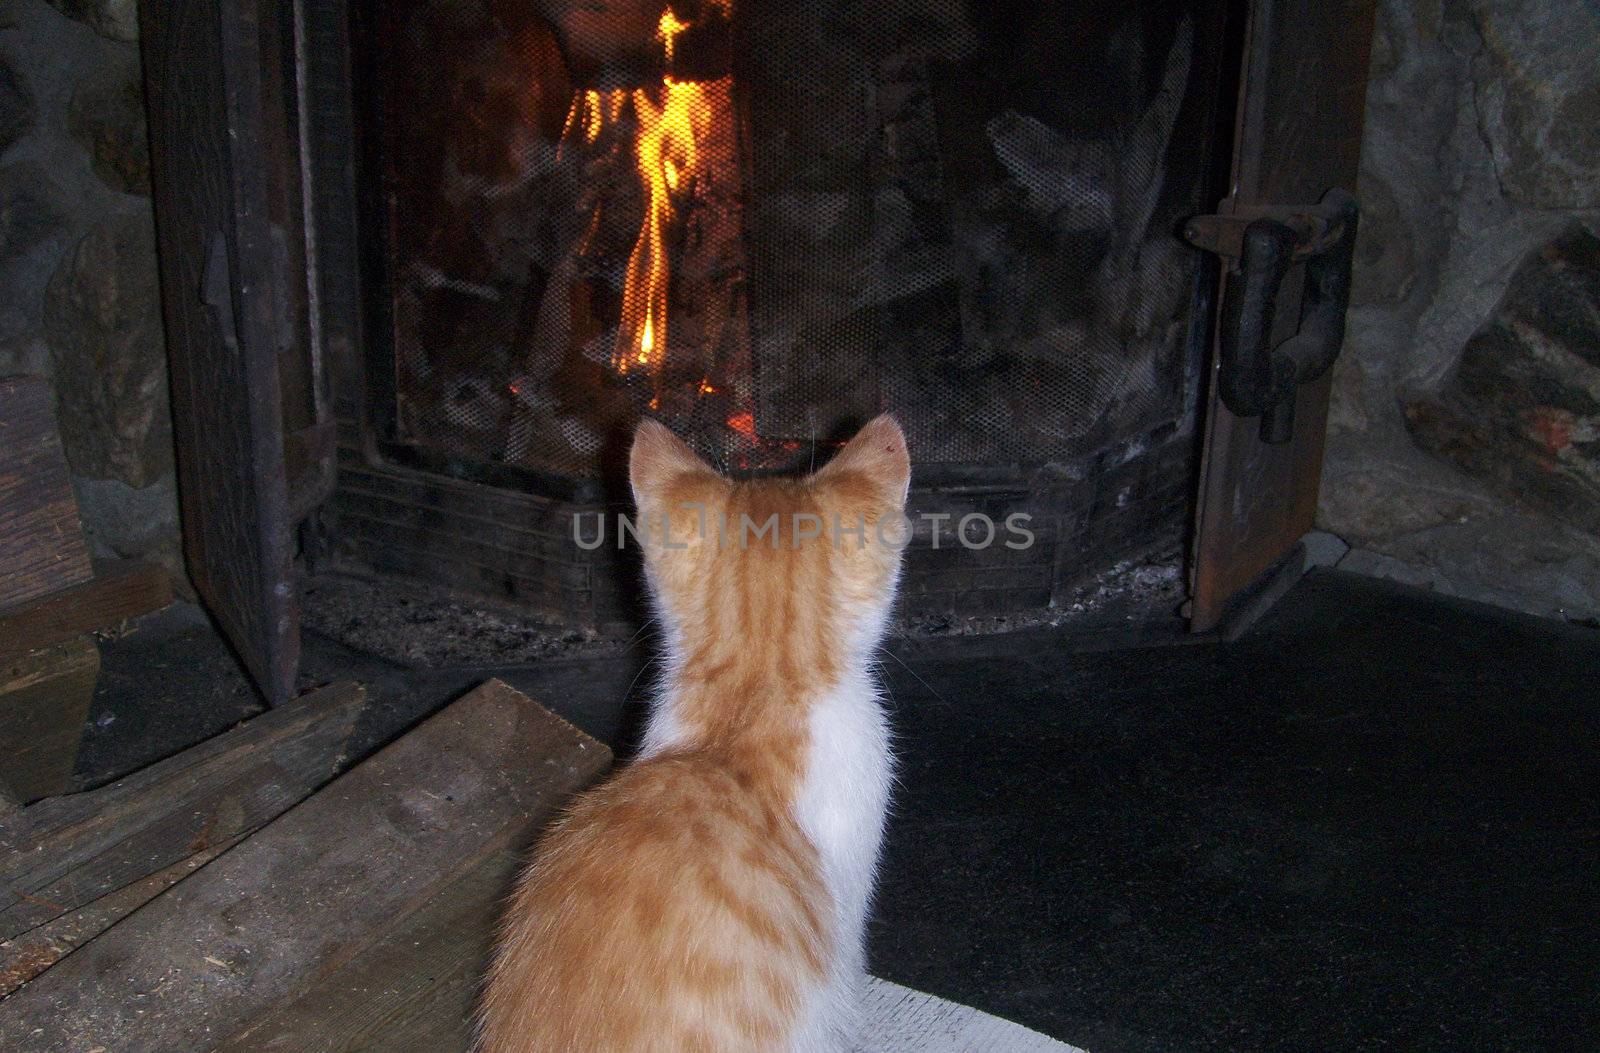 Baby cat on fireplace by monirha